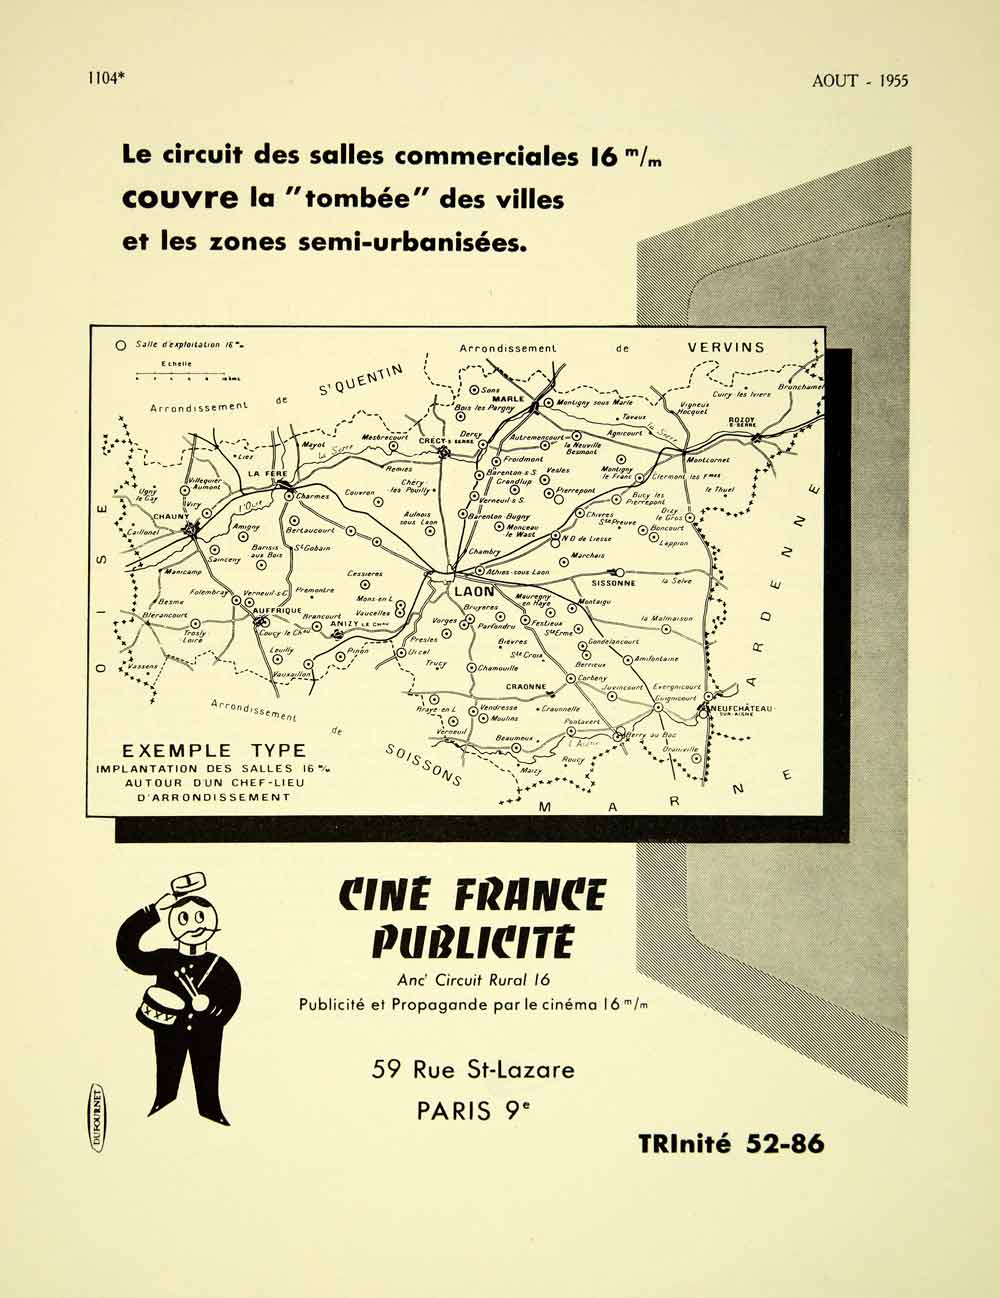 1955 Ad Vintage French Cine France Publicite Movie Film Advertising Map VENA4